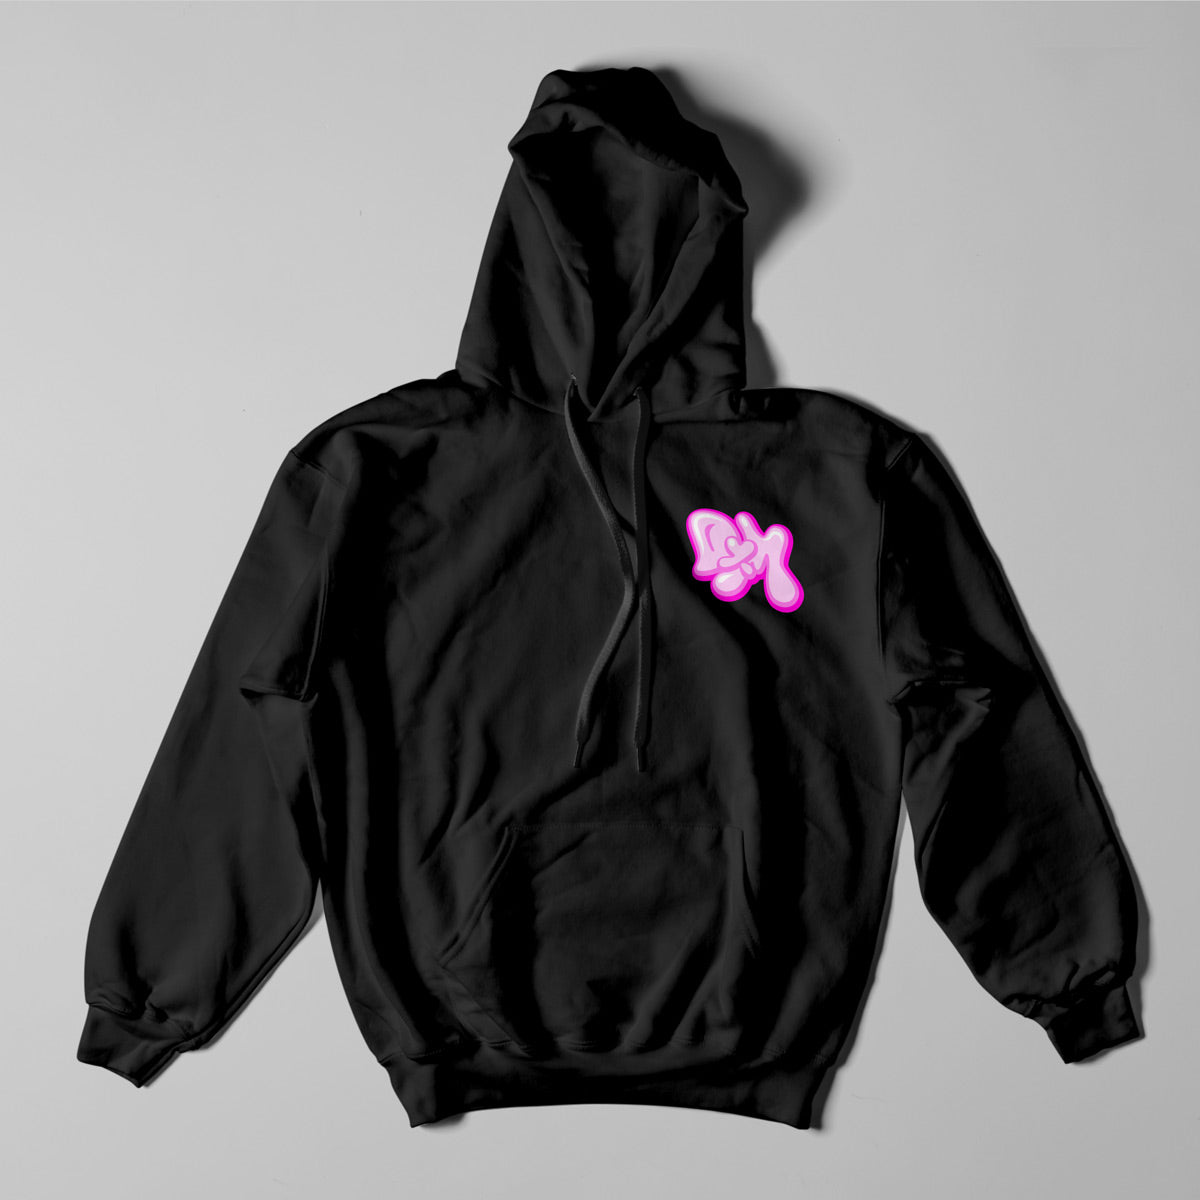 DxM - DM logo heavyweight pullover hoodie